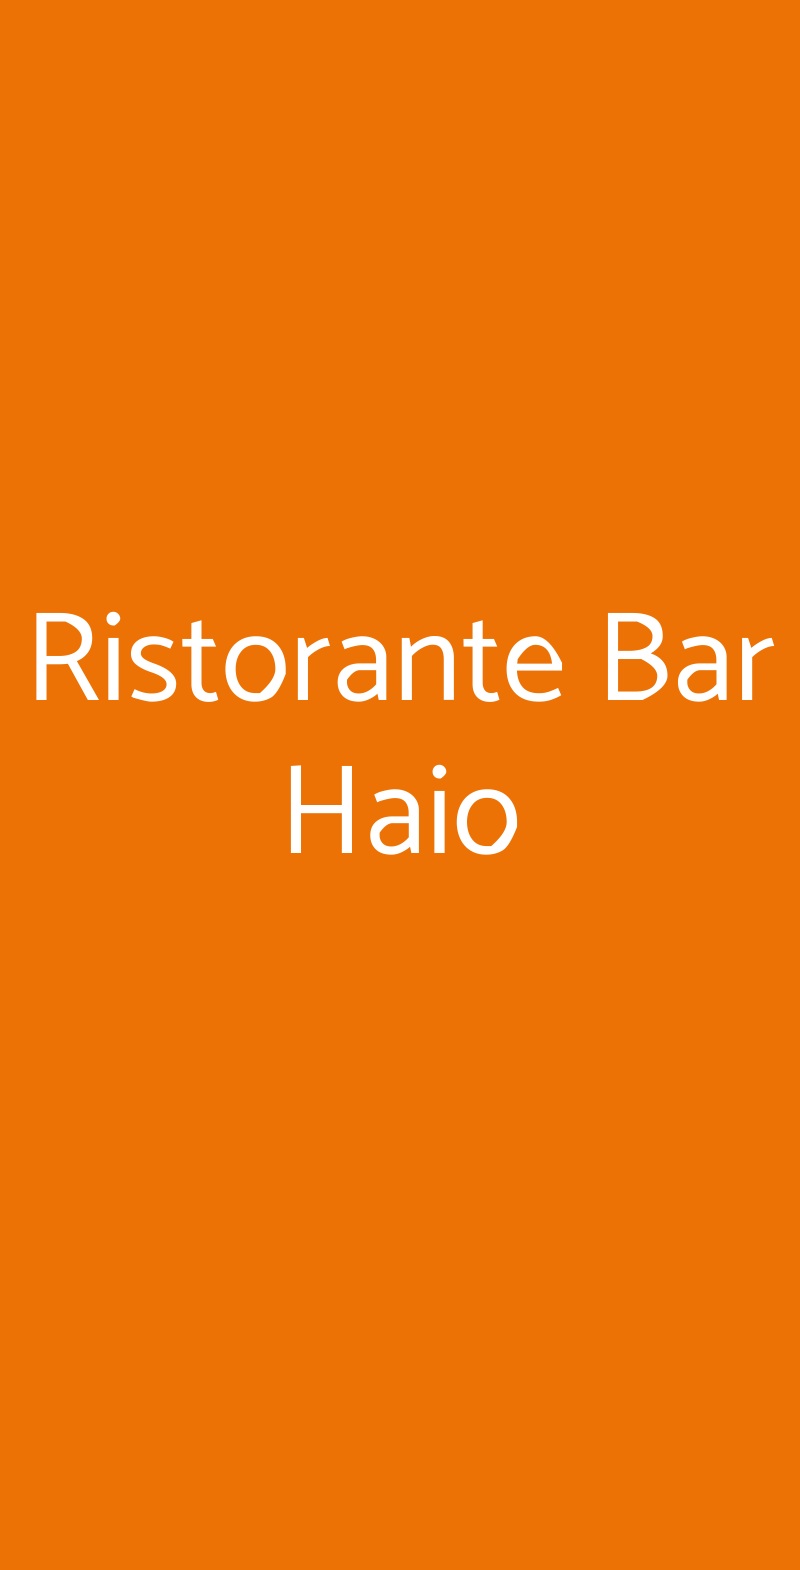 Ristorante Bar Haio Milano menù 1 pagina